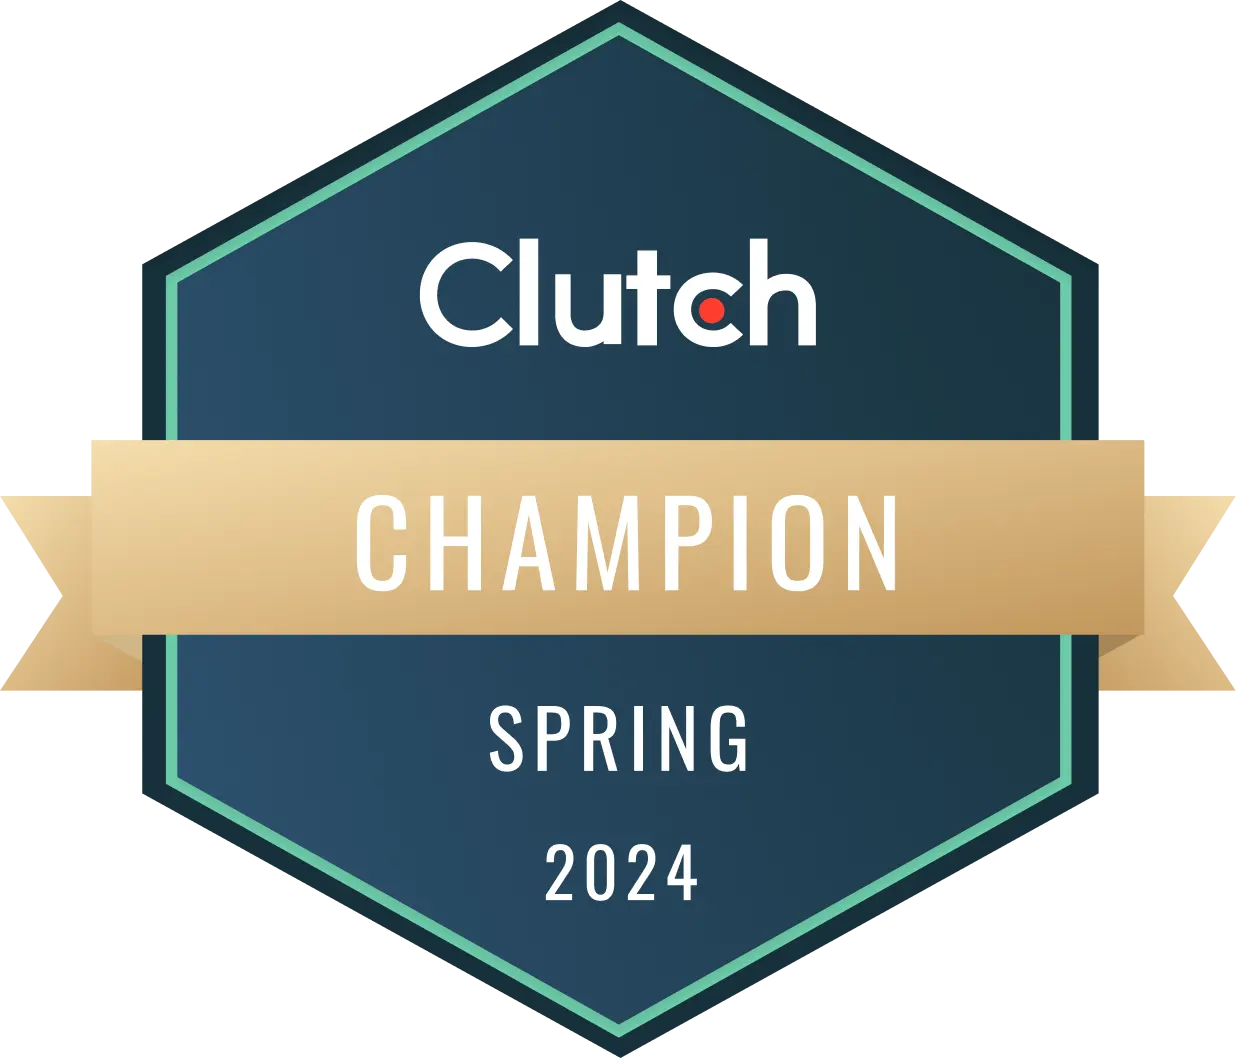 Clutch Champion badge.